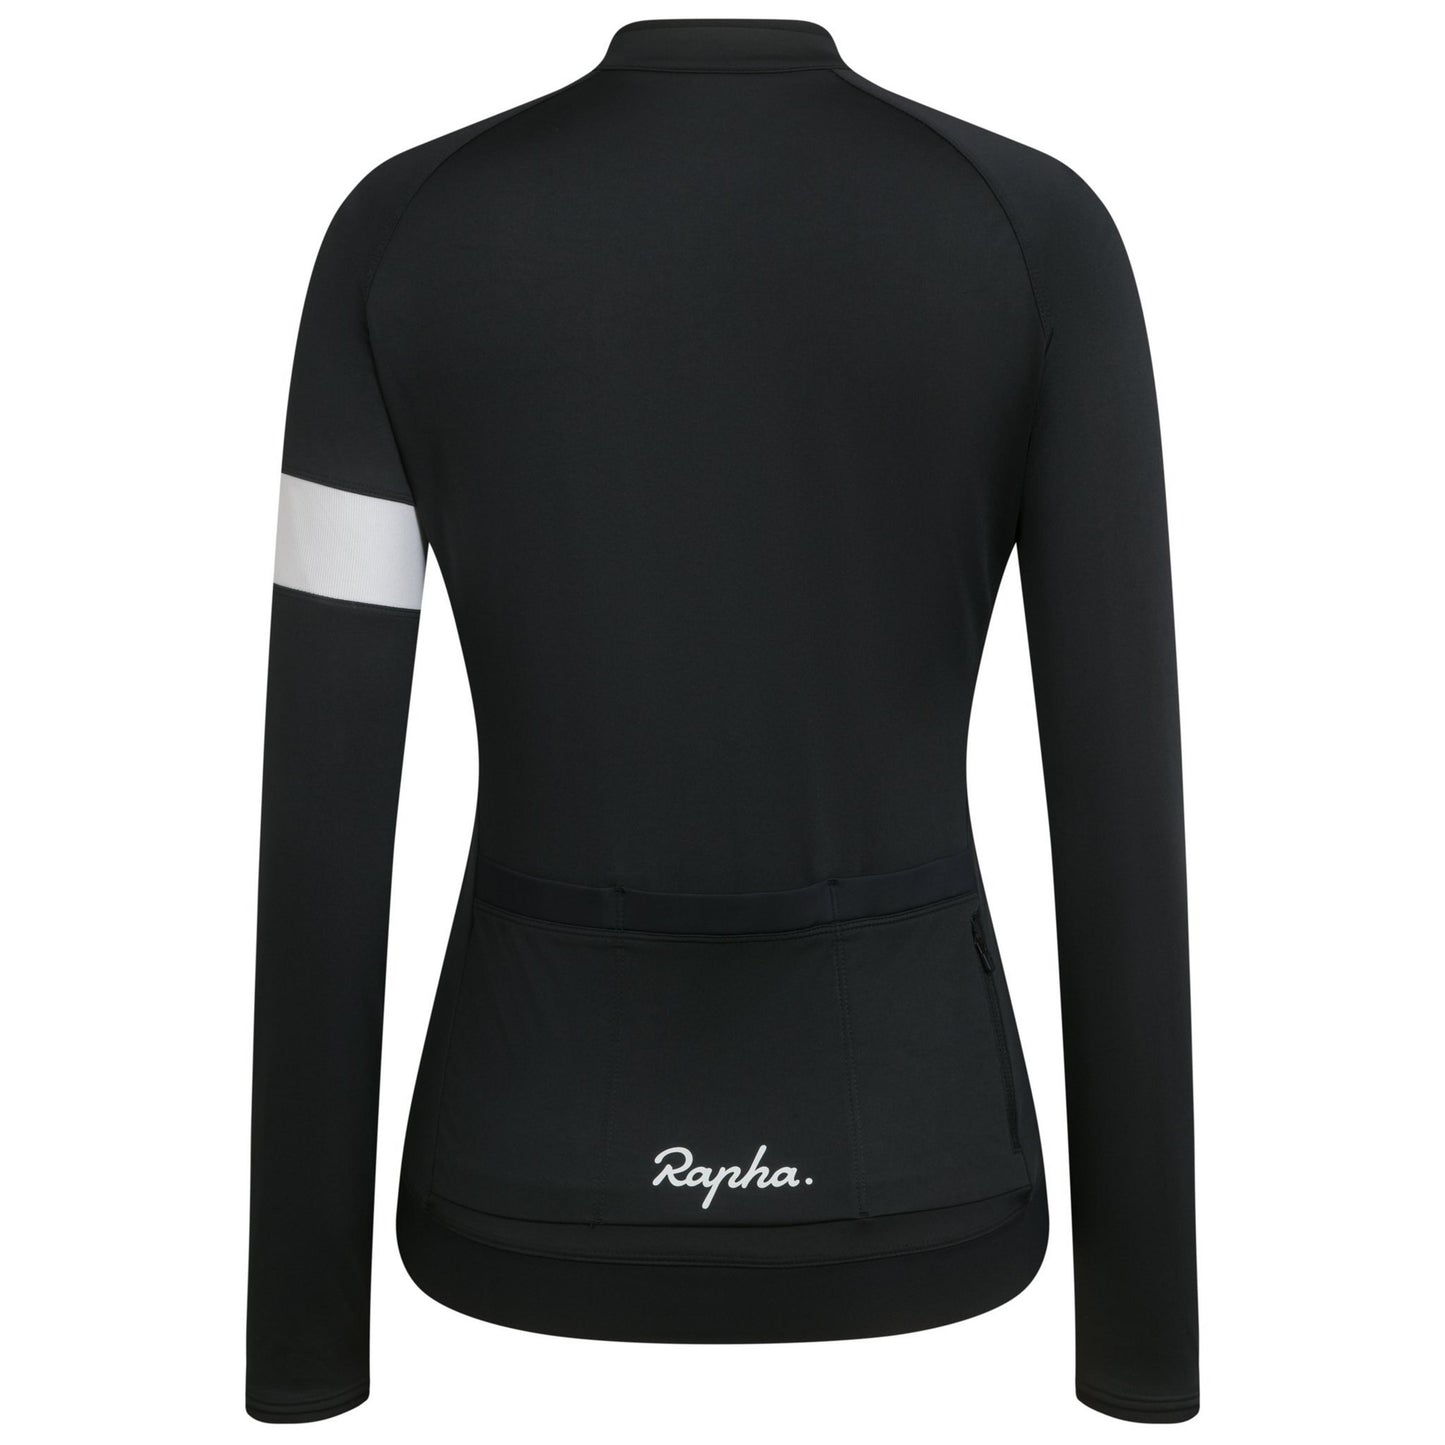 Rapha Women's Core Long Sleeve Jersey - Black/White